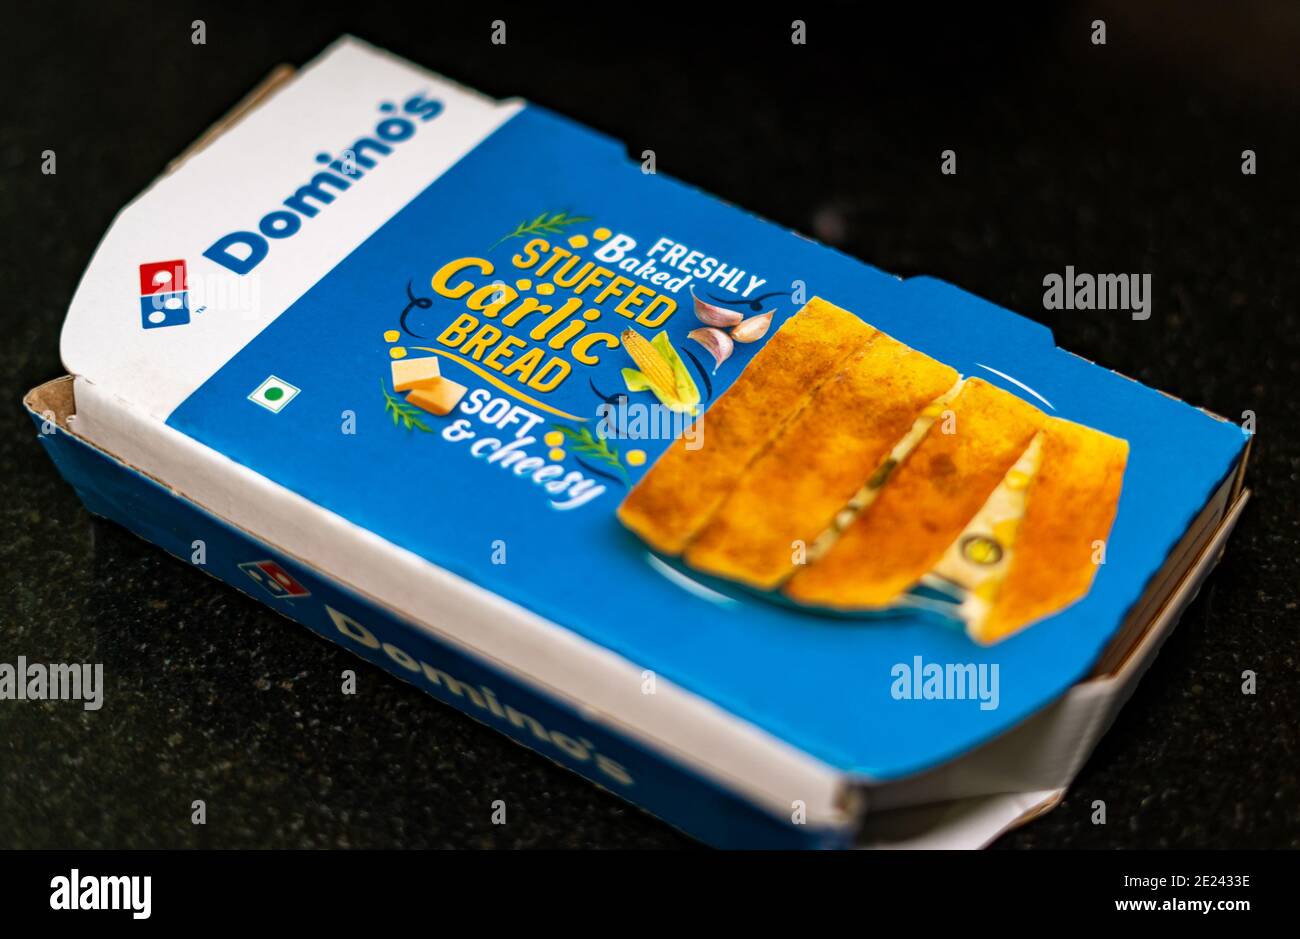 Takeout box of Domino's Stuffed Garlic Bread on a black granite background Stock Photo